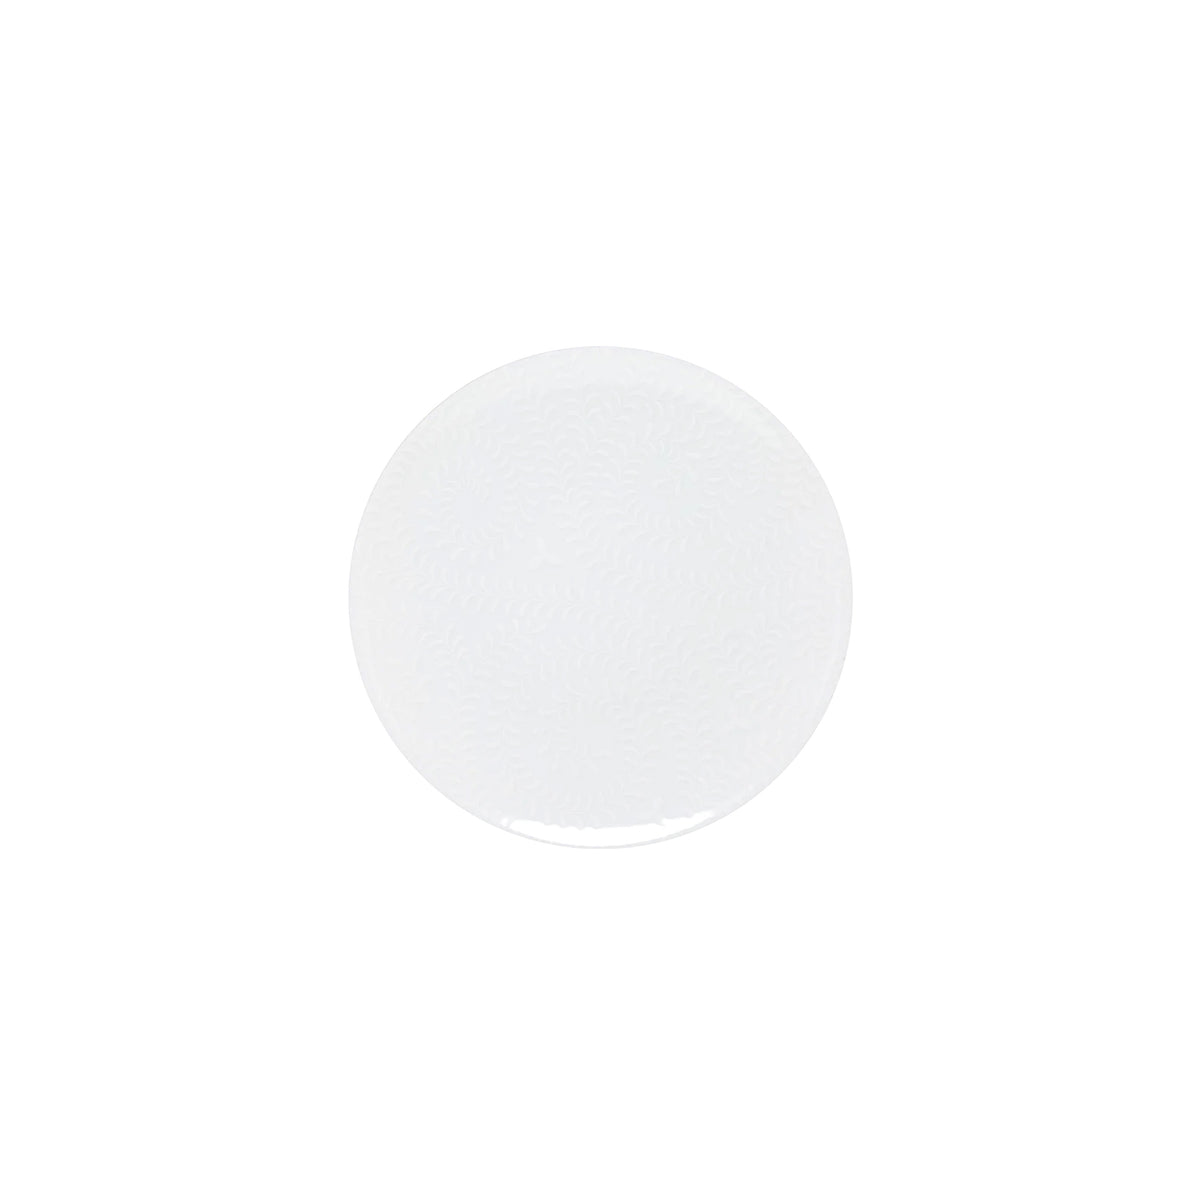 ARJUNA white on white - Bread plate